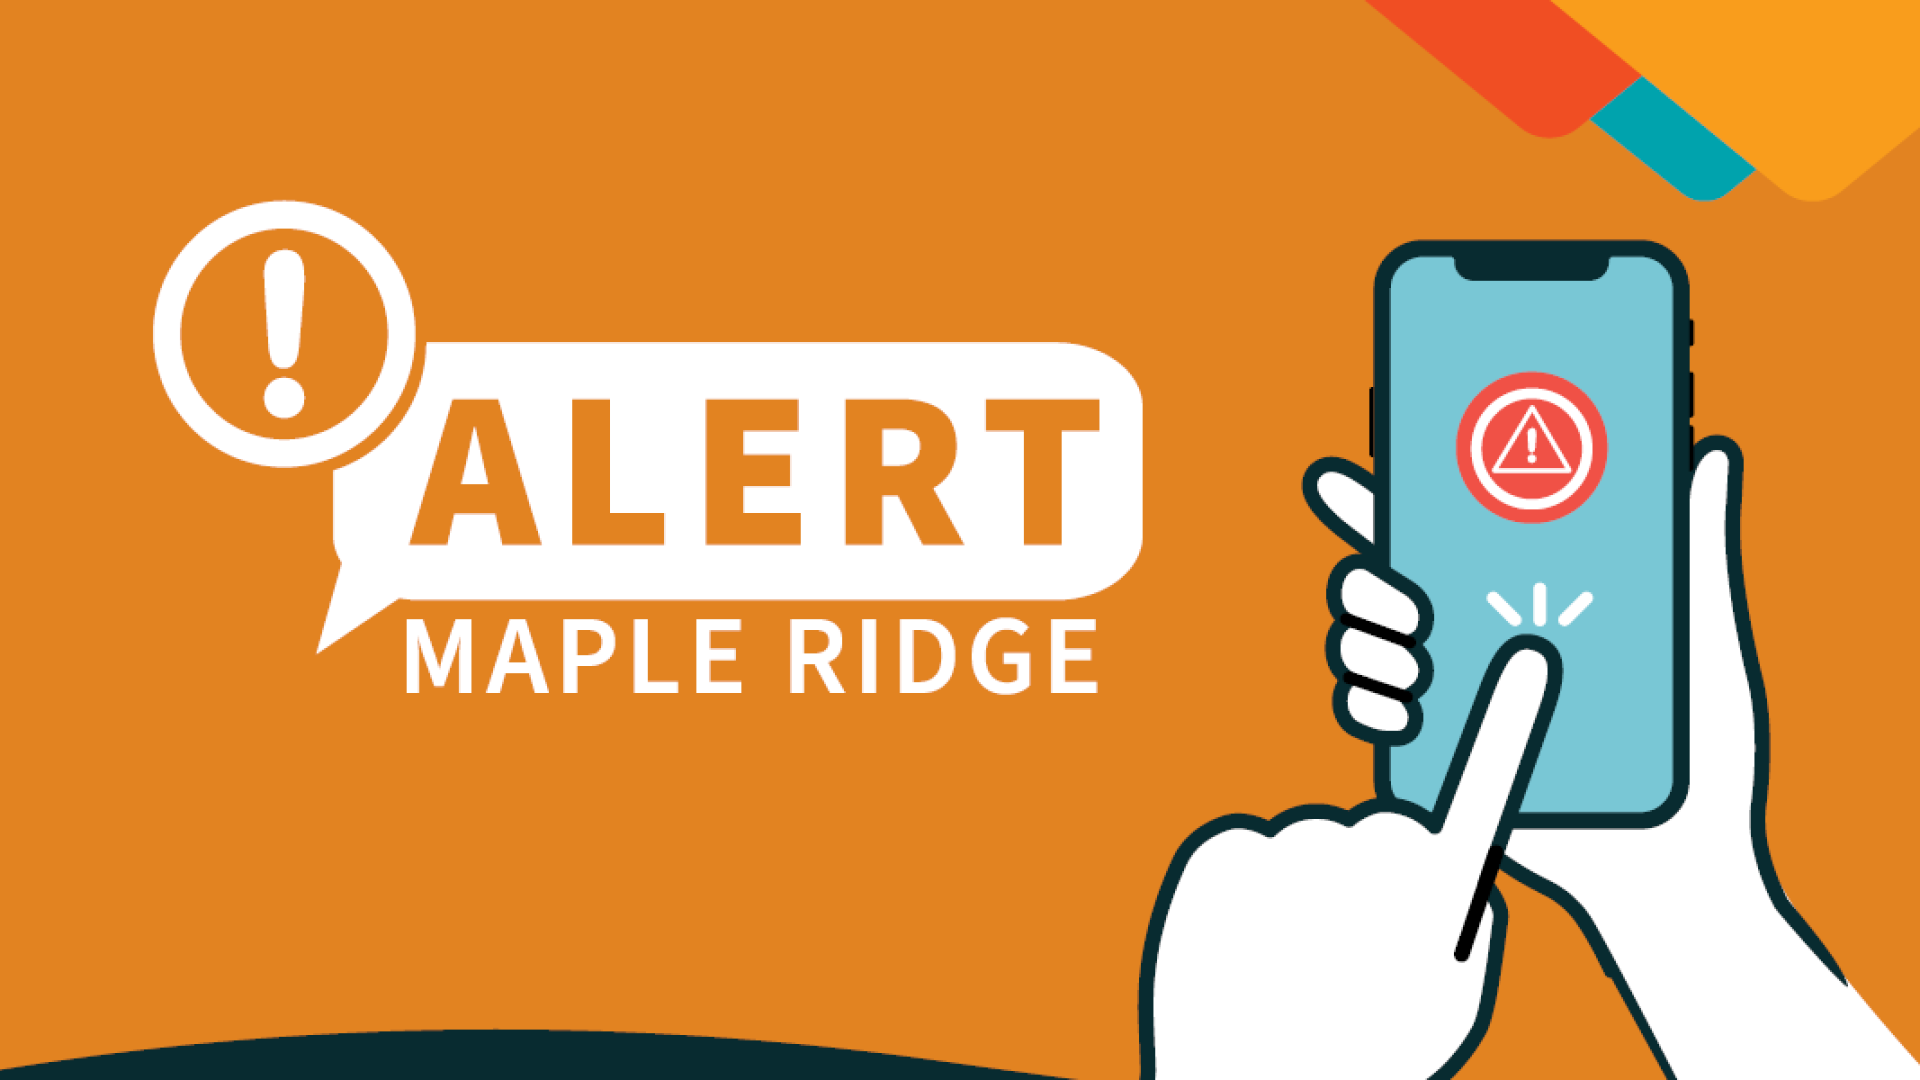 alert maple ridge logo and graphic